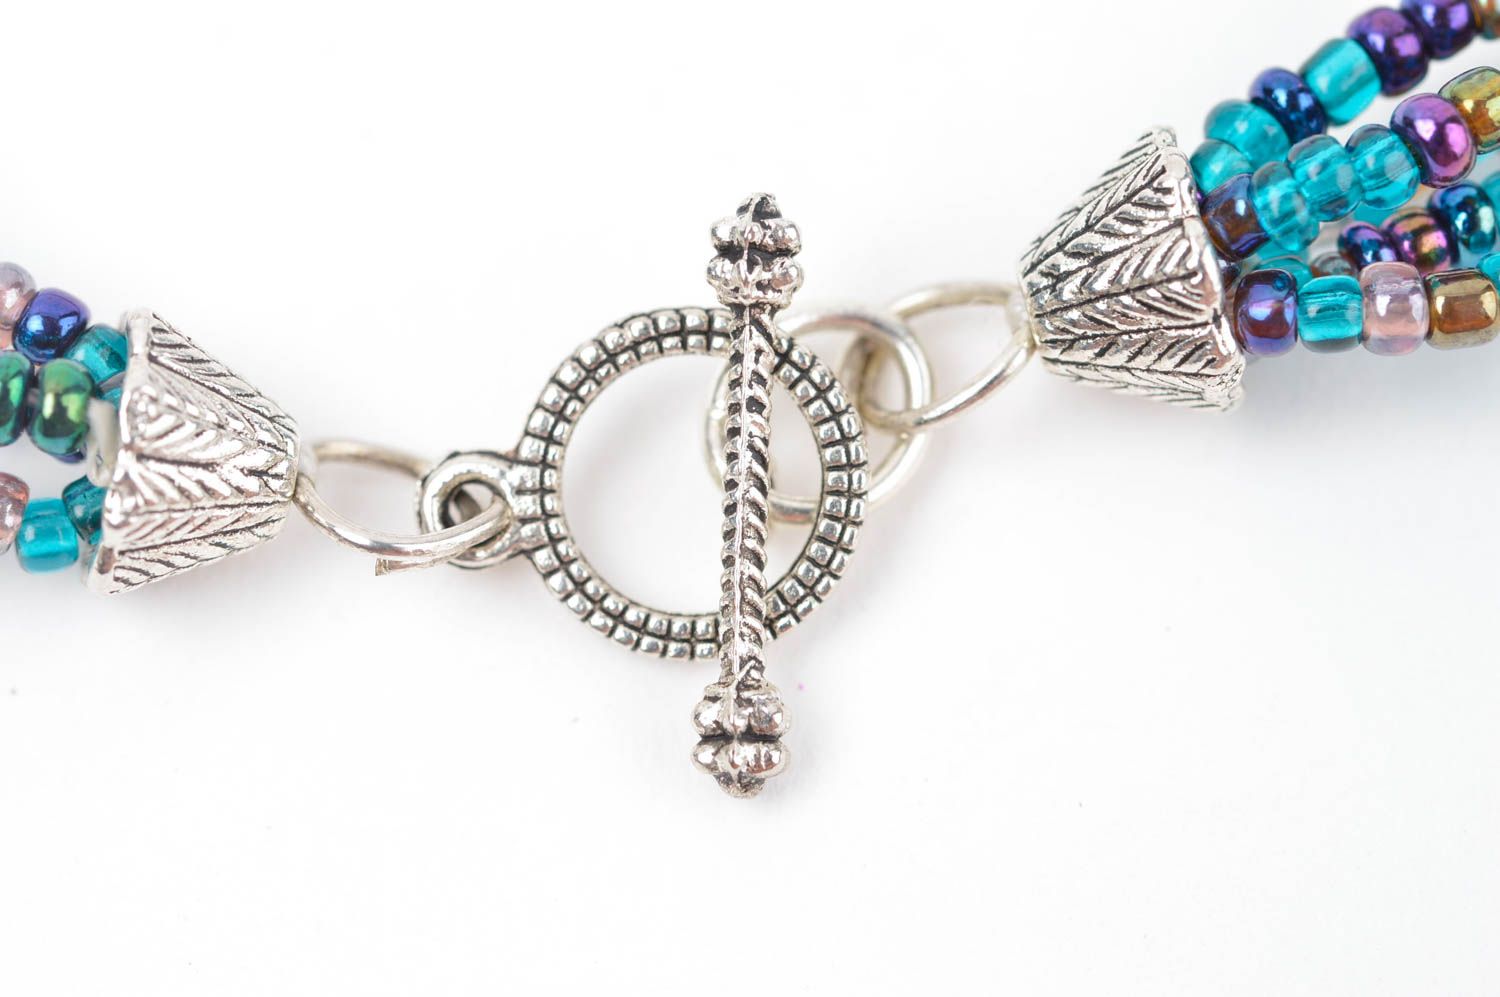 Handmade necklace designer accessory unusual jewelry gift ideas elite jewelry photo 3